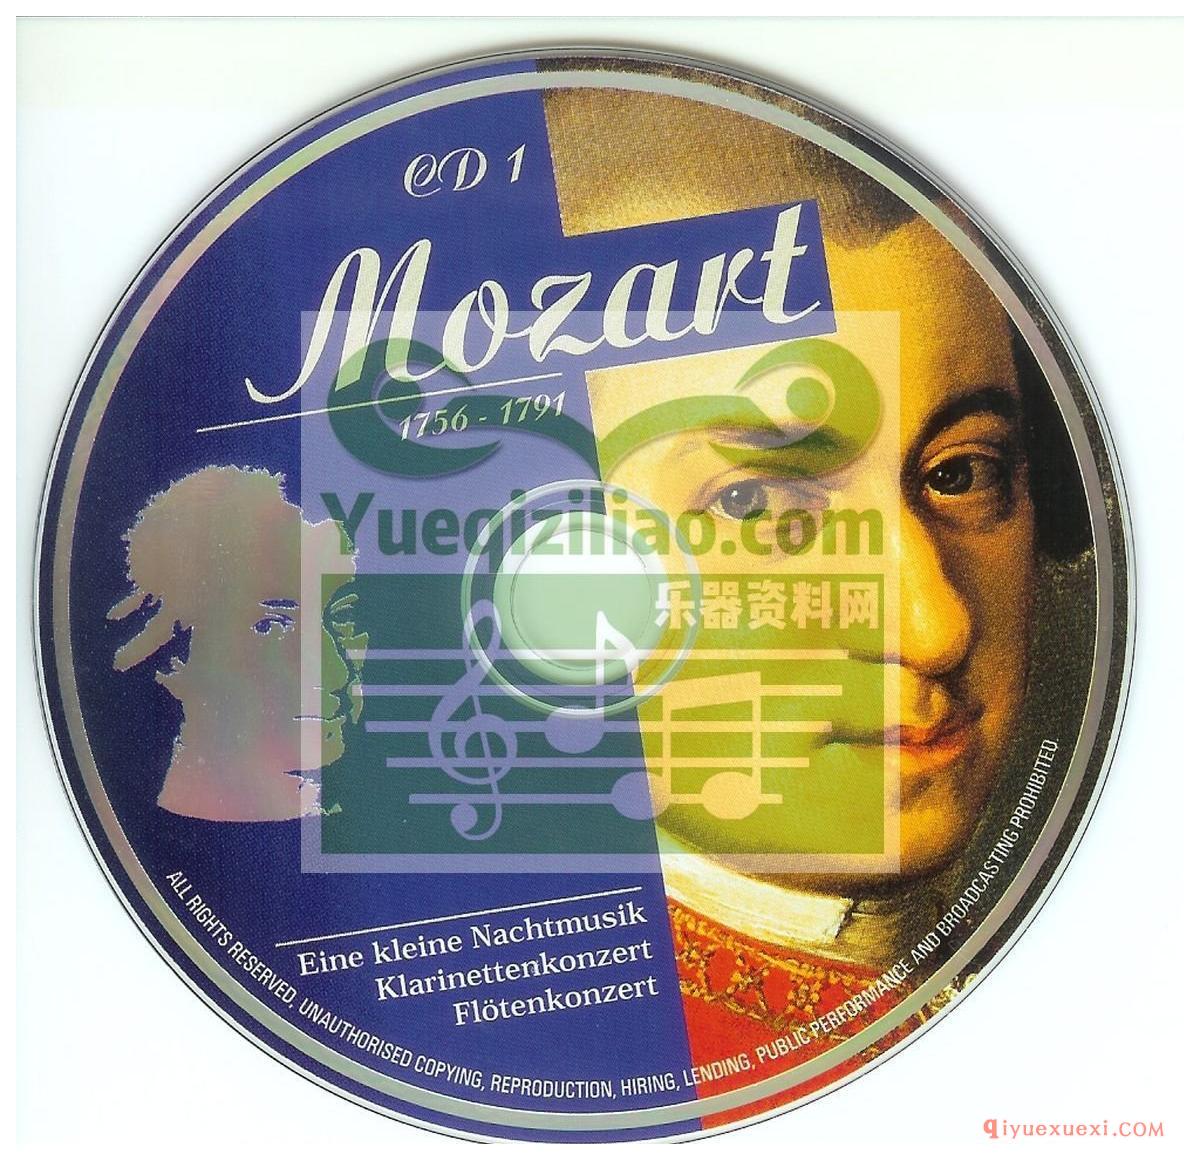  Diamond Classics (16CD)01.Mozart